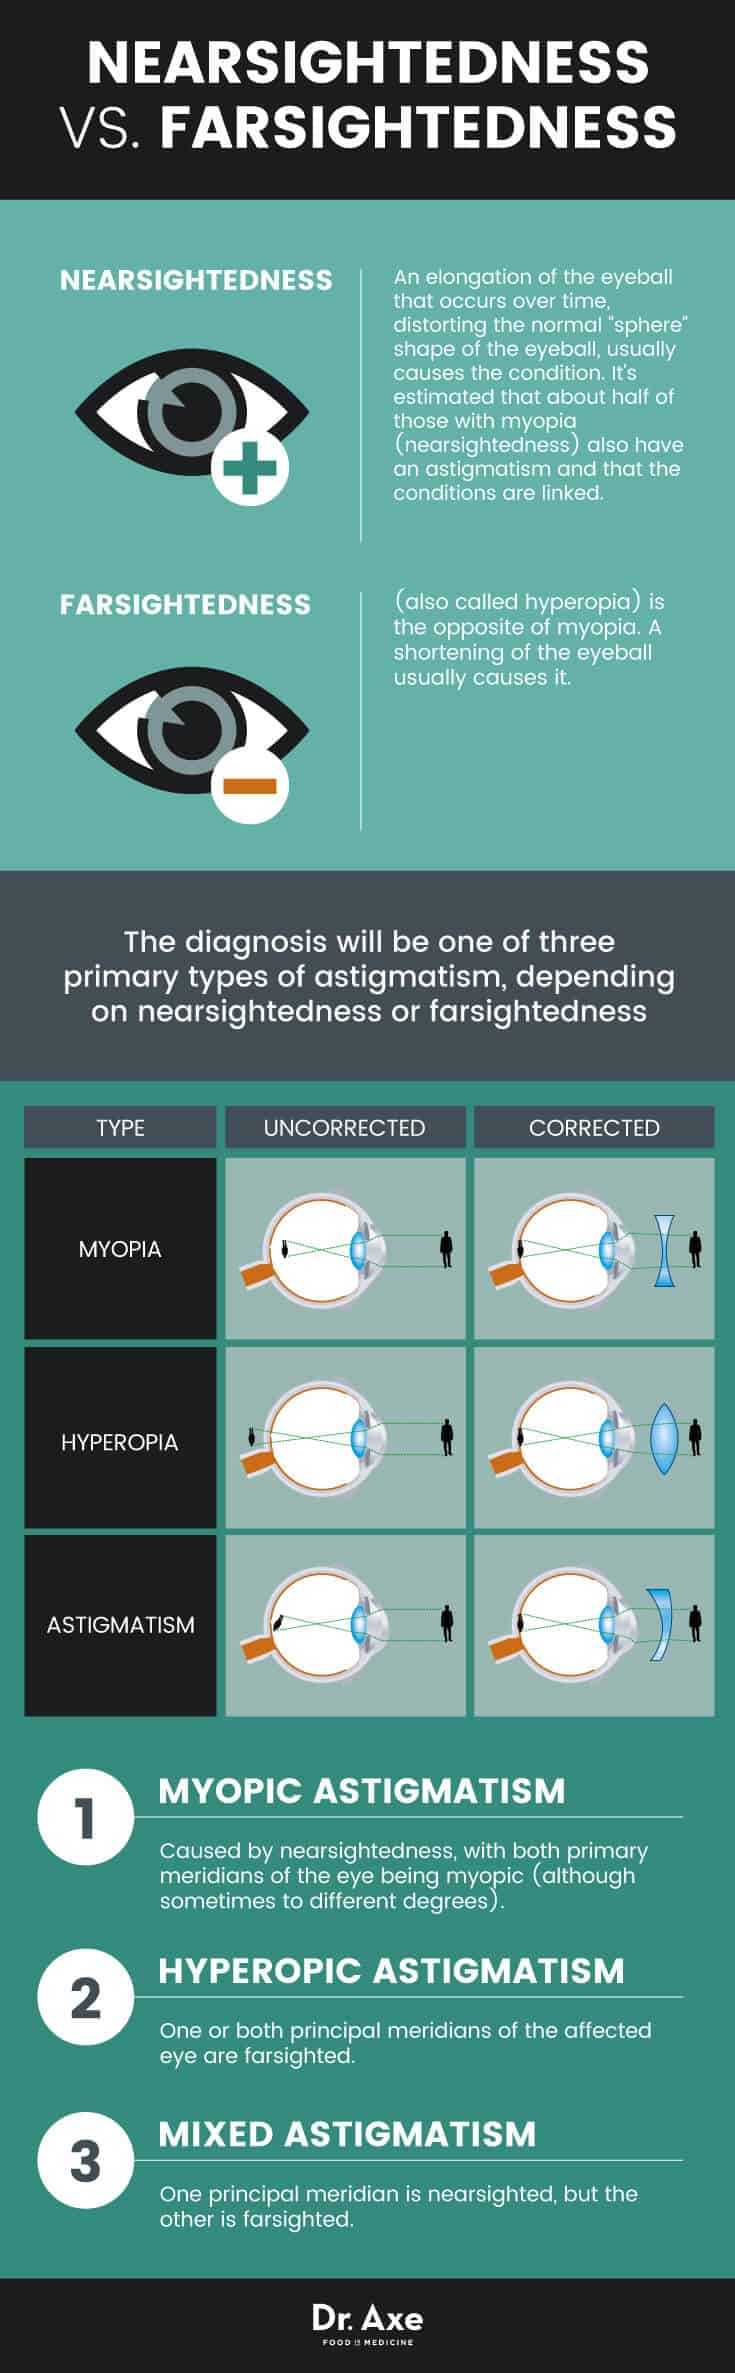 types of astigmatism